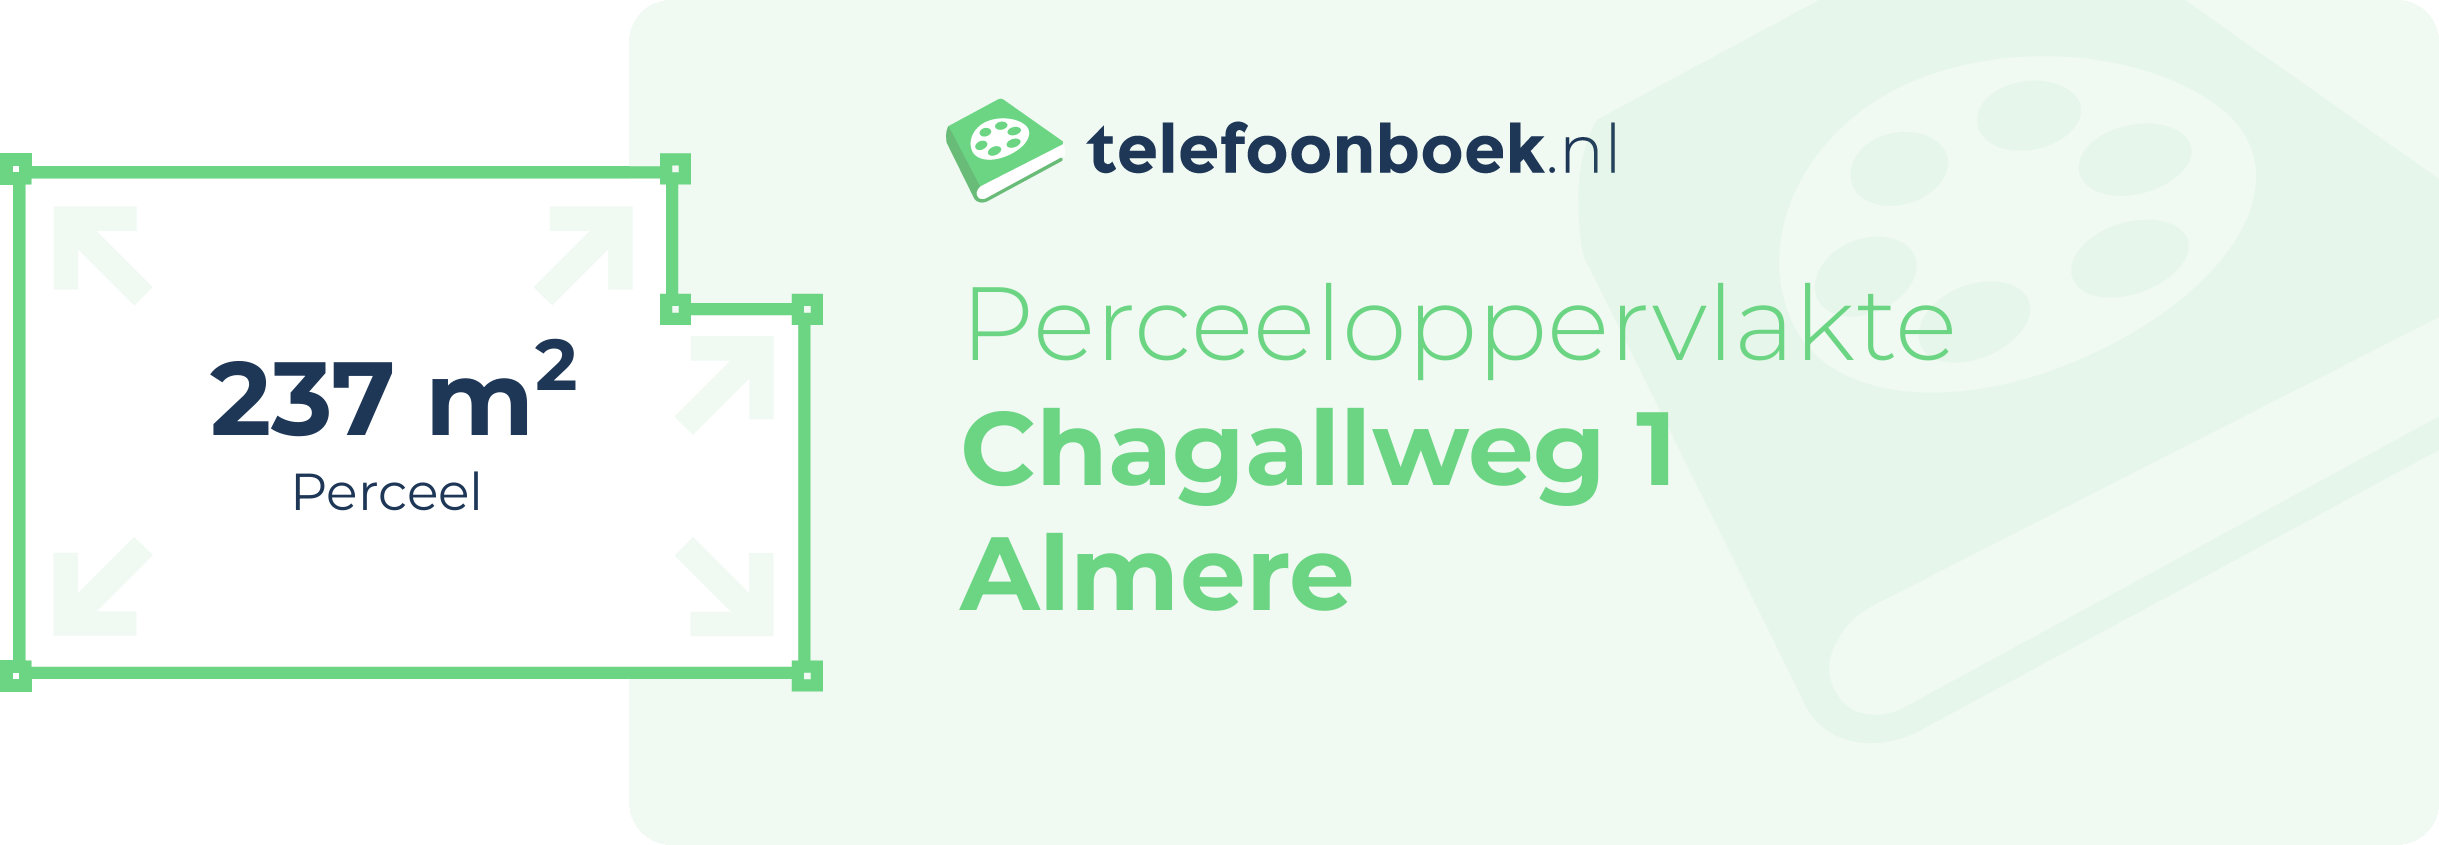 Perceeloppervlakte Chagallweg 1 Almere